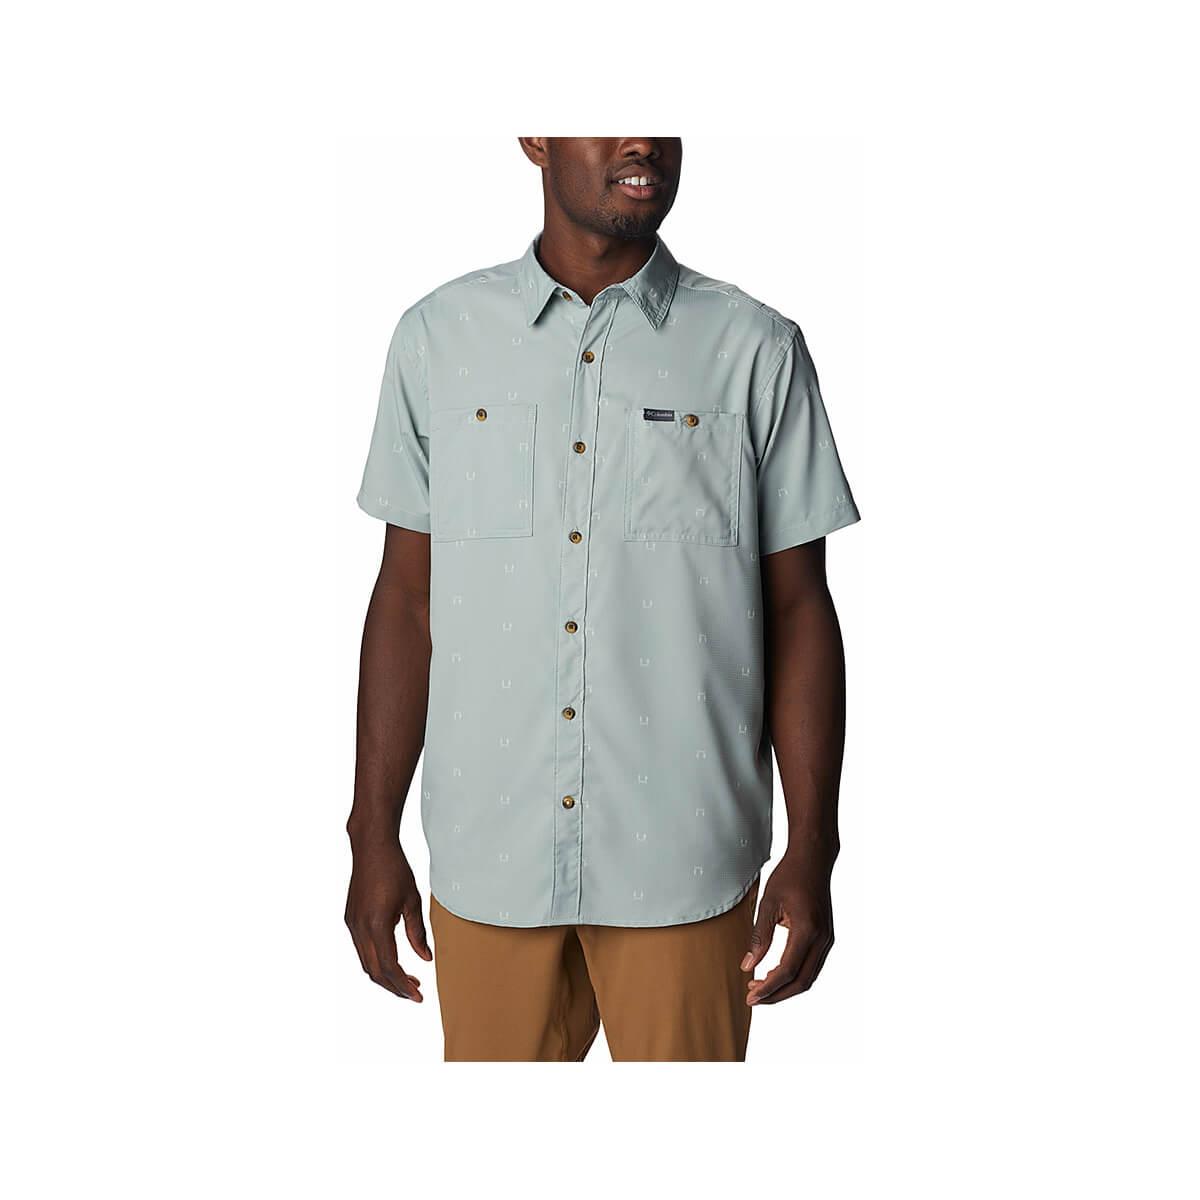  Men's Utilizer Printed Woven Short Sleeve Shirt